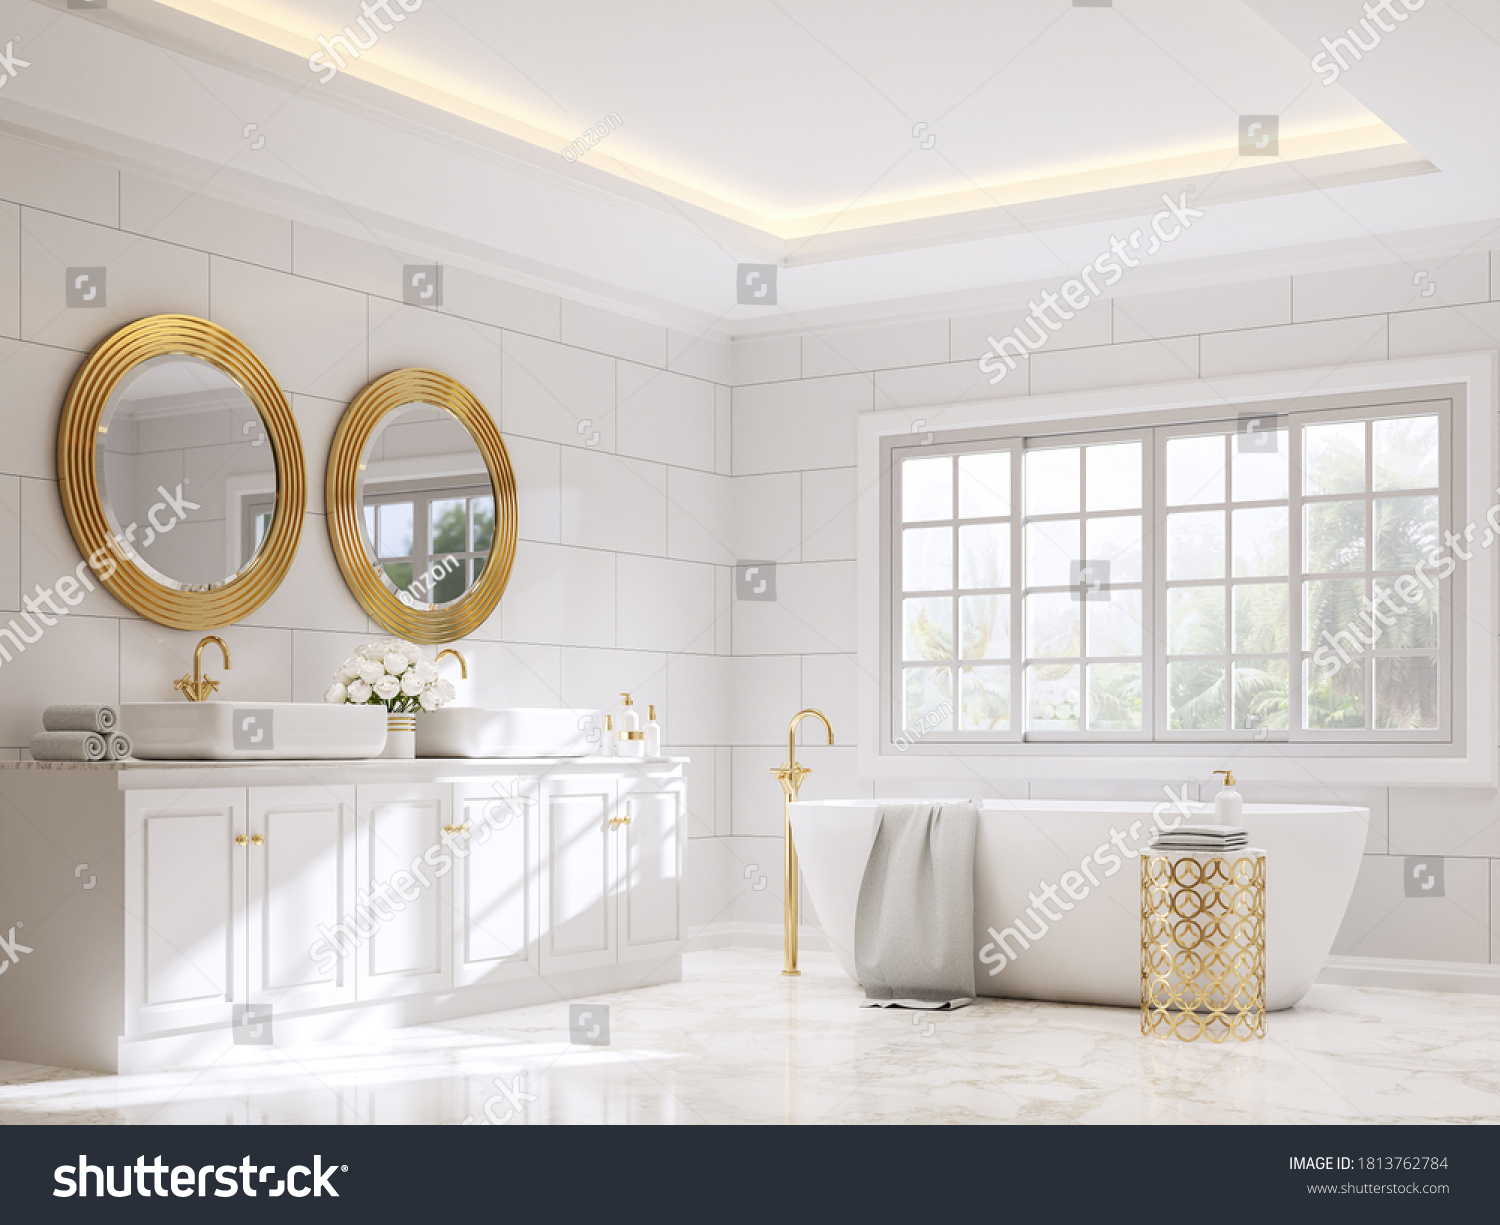 58,513 Classic bathroom Images, Stock Photos & Vectors | Shutterstock